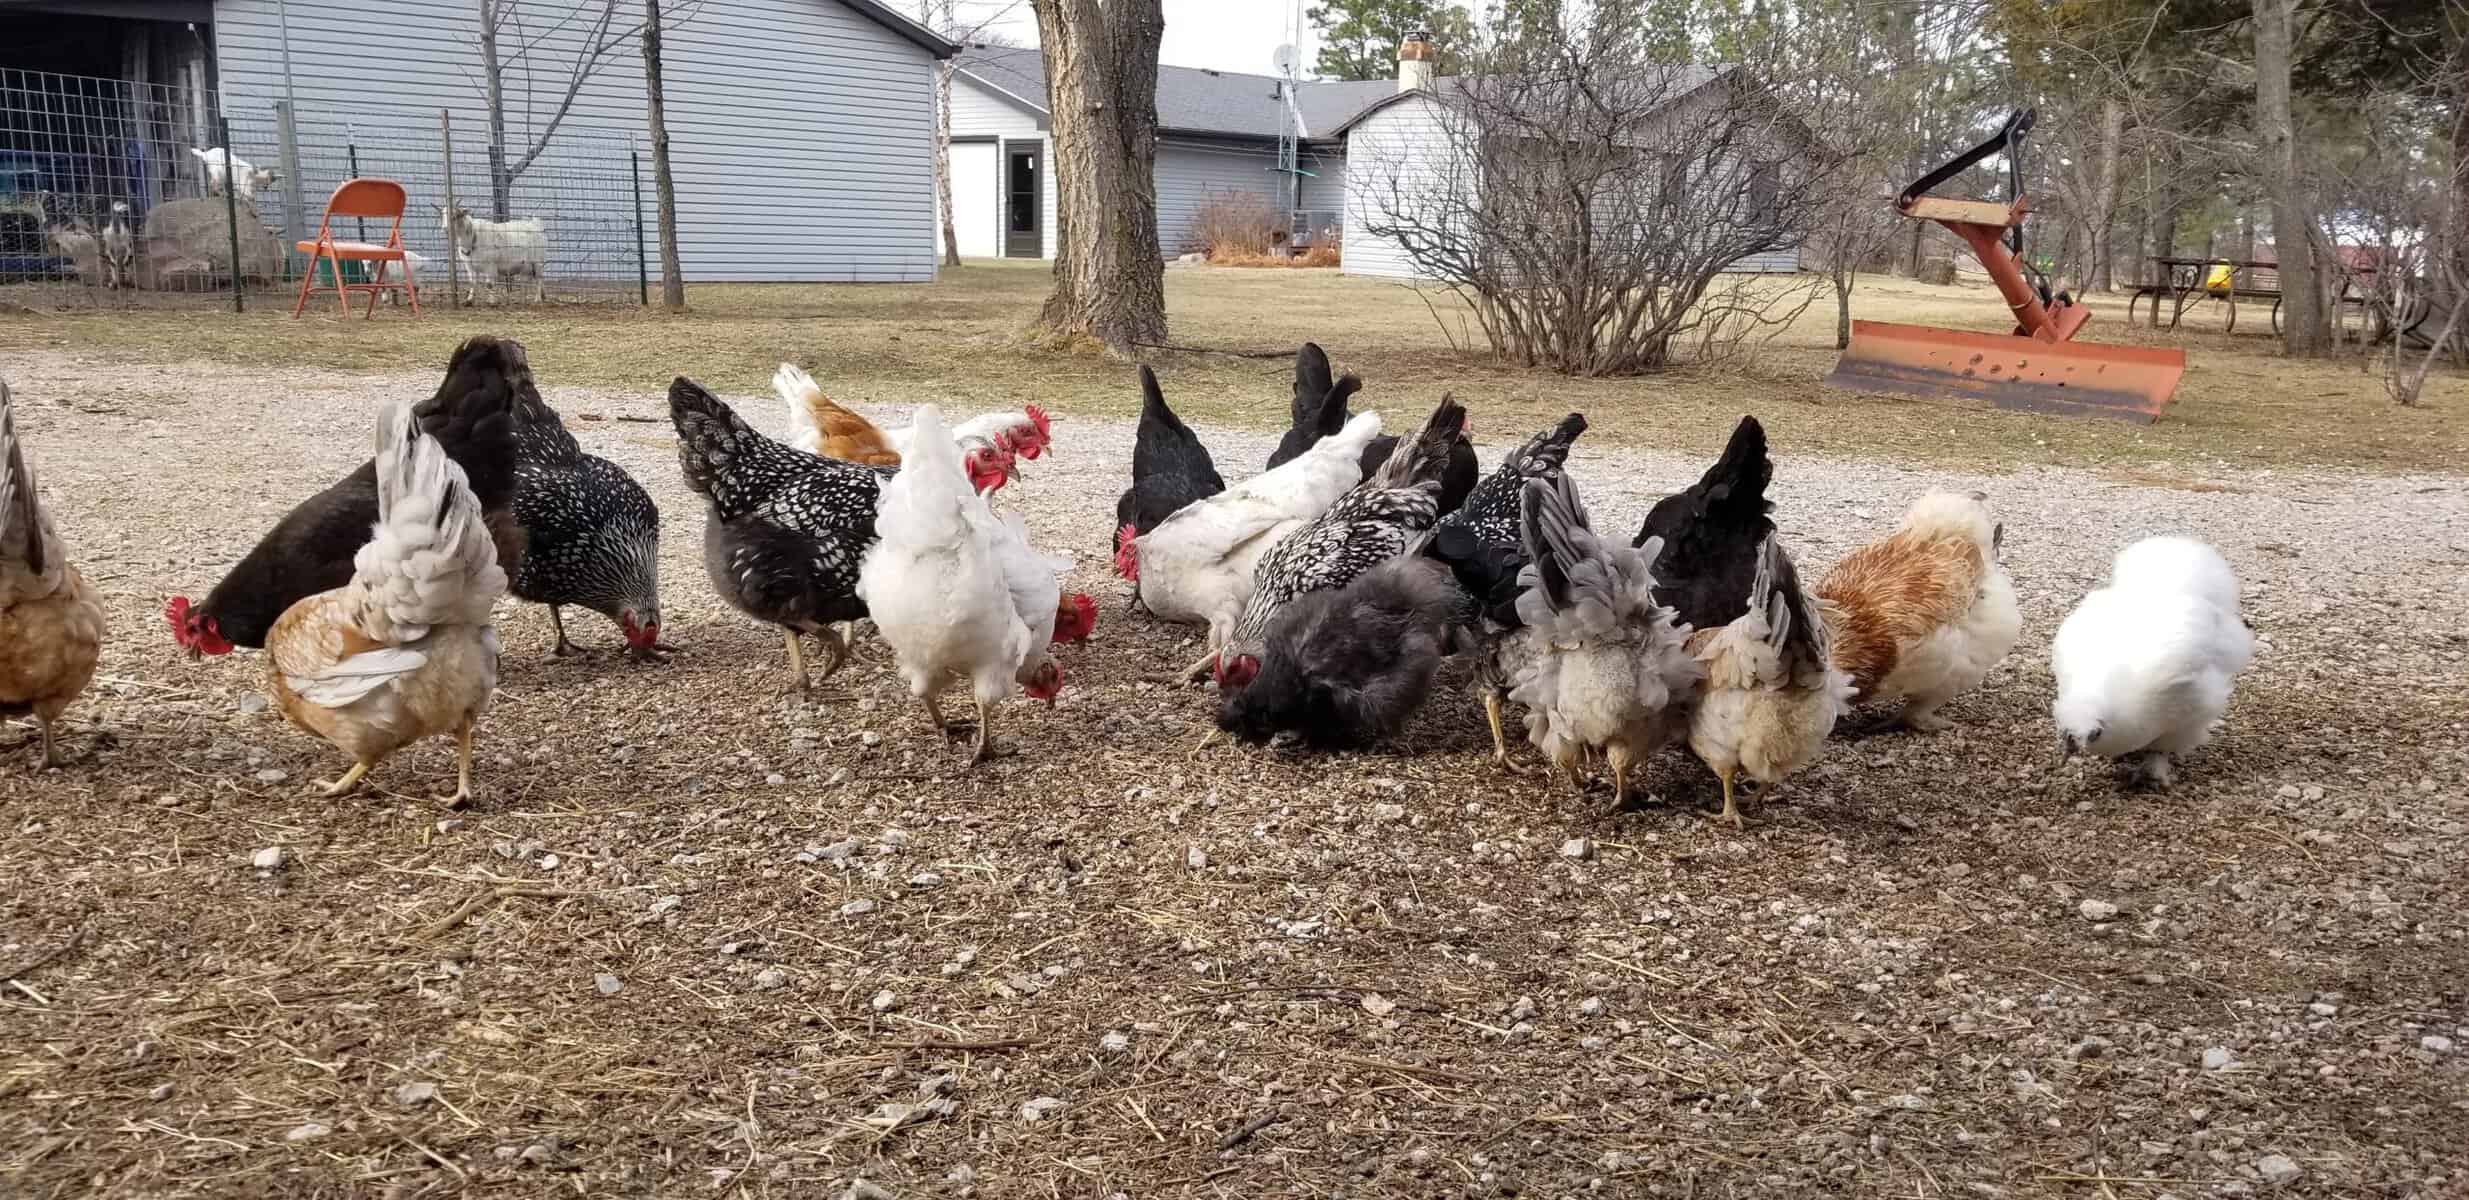 free range chickens at penner mini farms lincoln ne